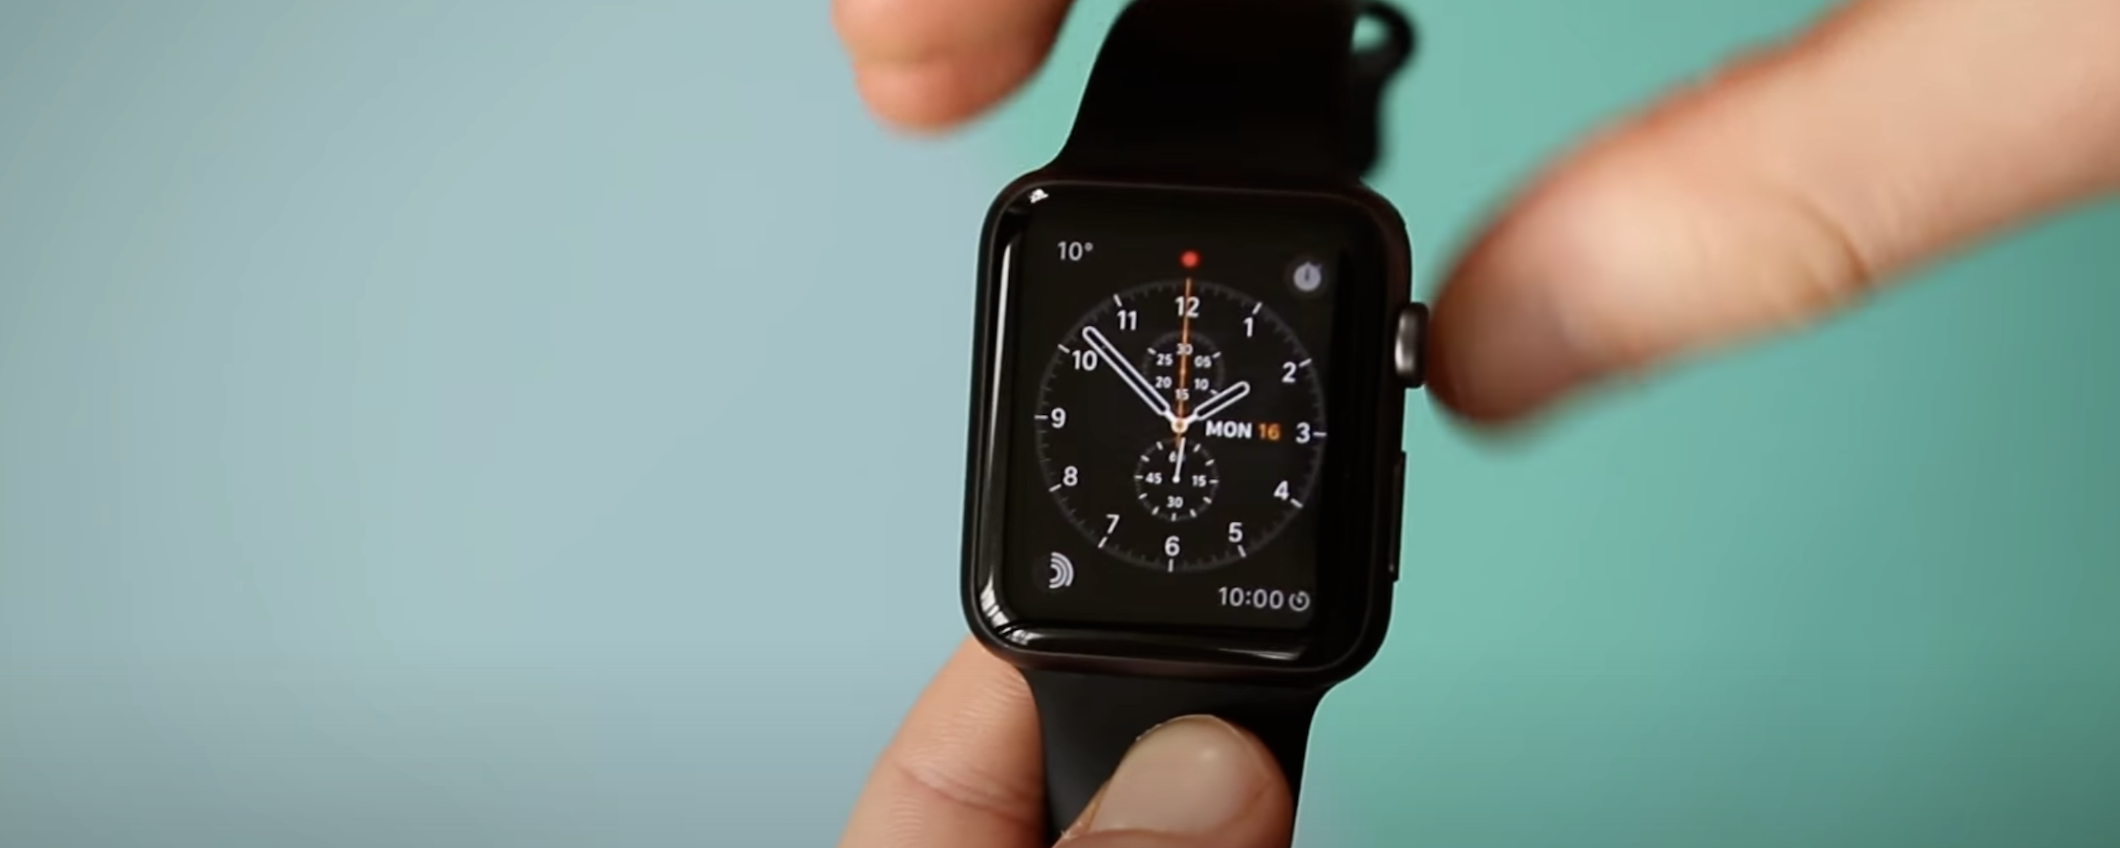 Apple Watch Series 1 è ufficialmente vintage